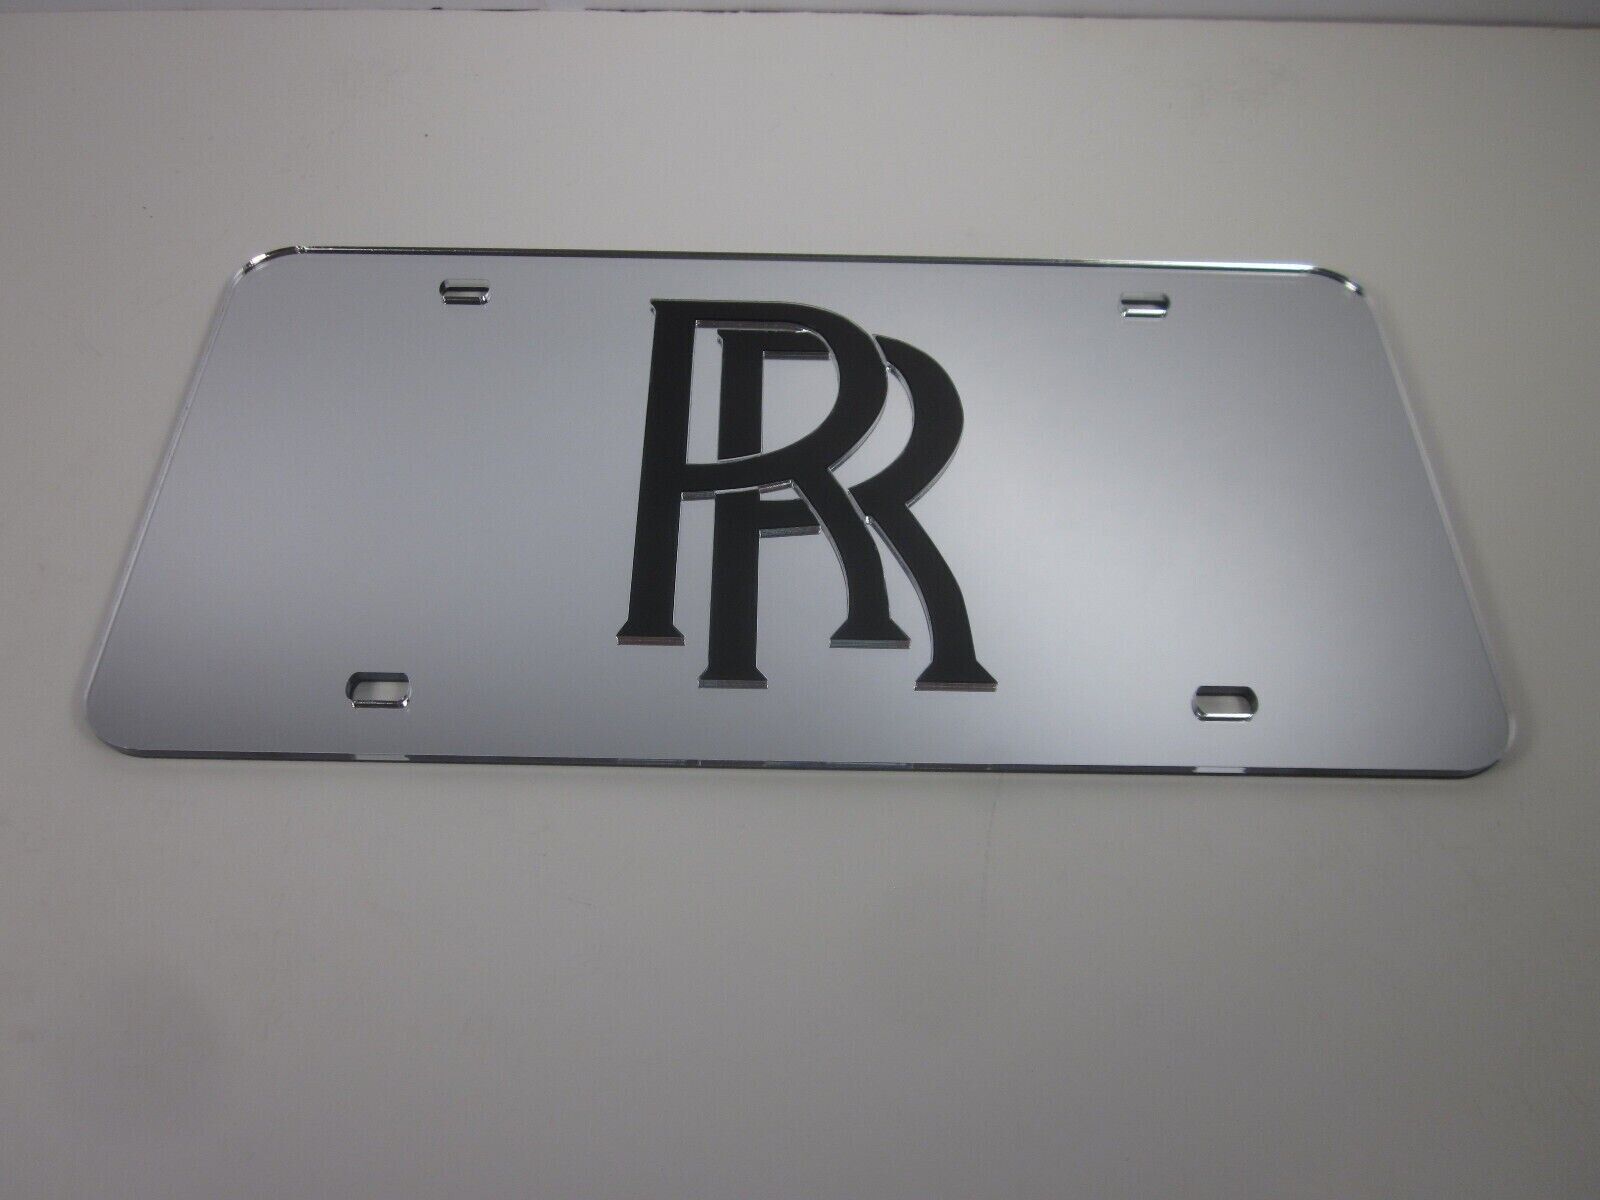 Rolls-Royce Acrlic Mirror License Plate Auto Tag nice